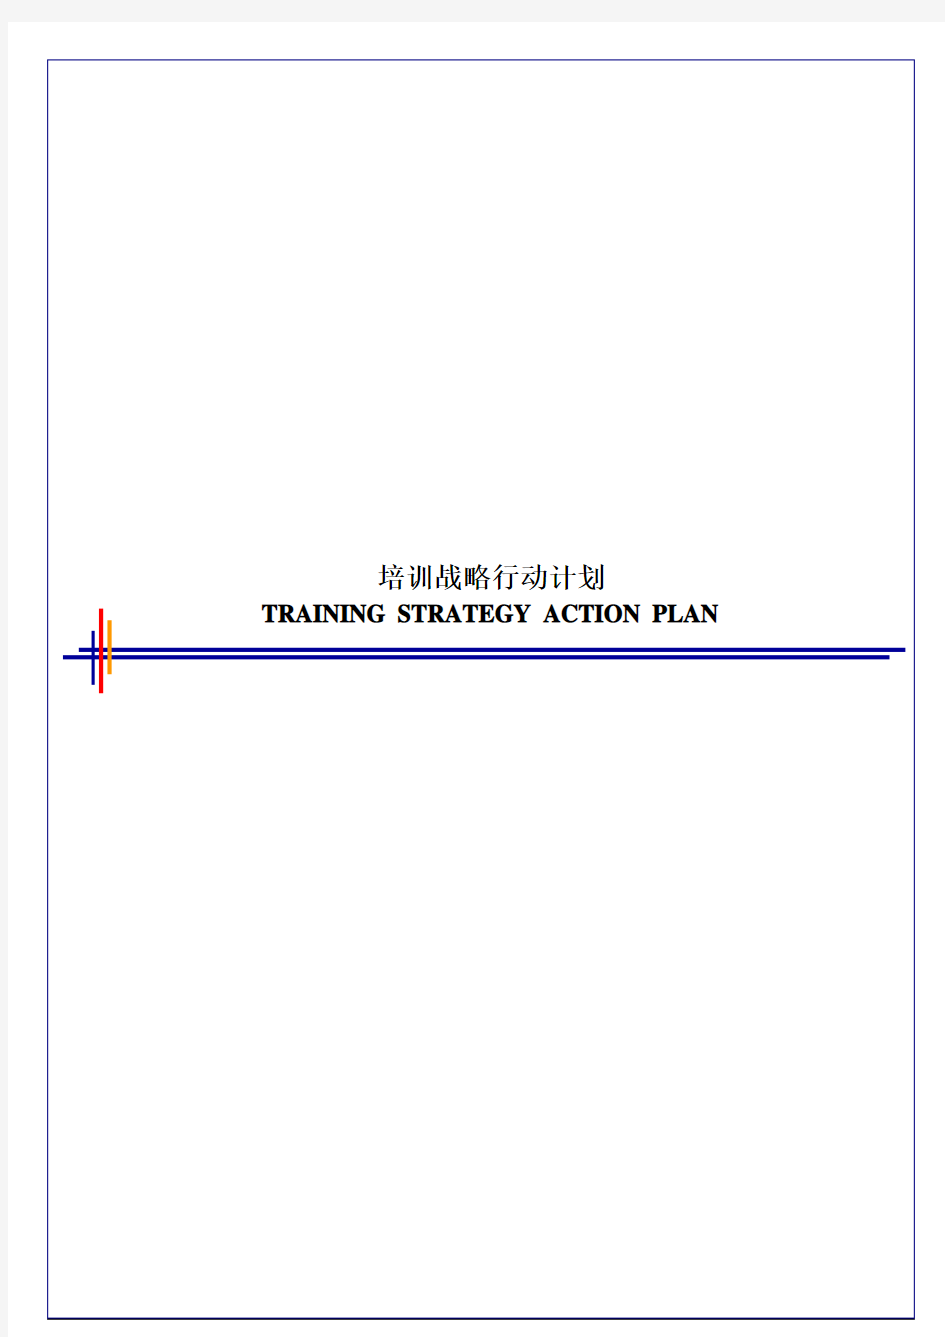 毕博-管理咨询工具方法—4.5TrainingStrategyActionPlan-Chinese